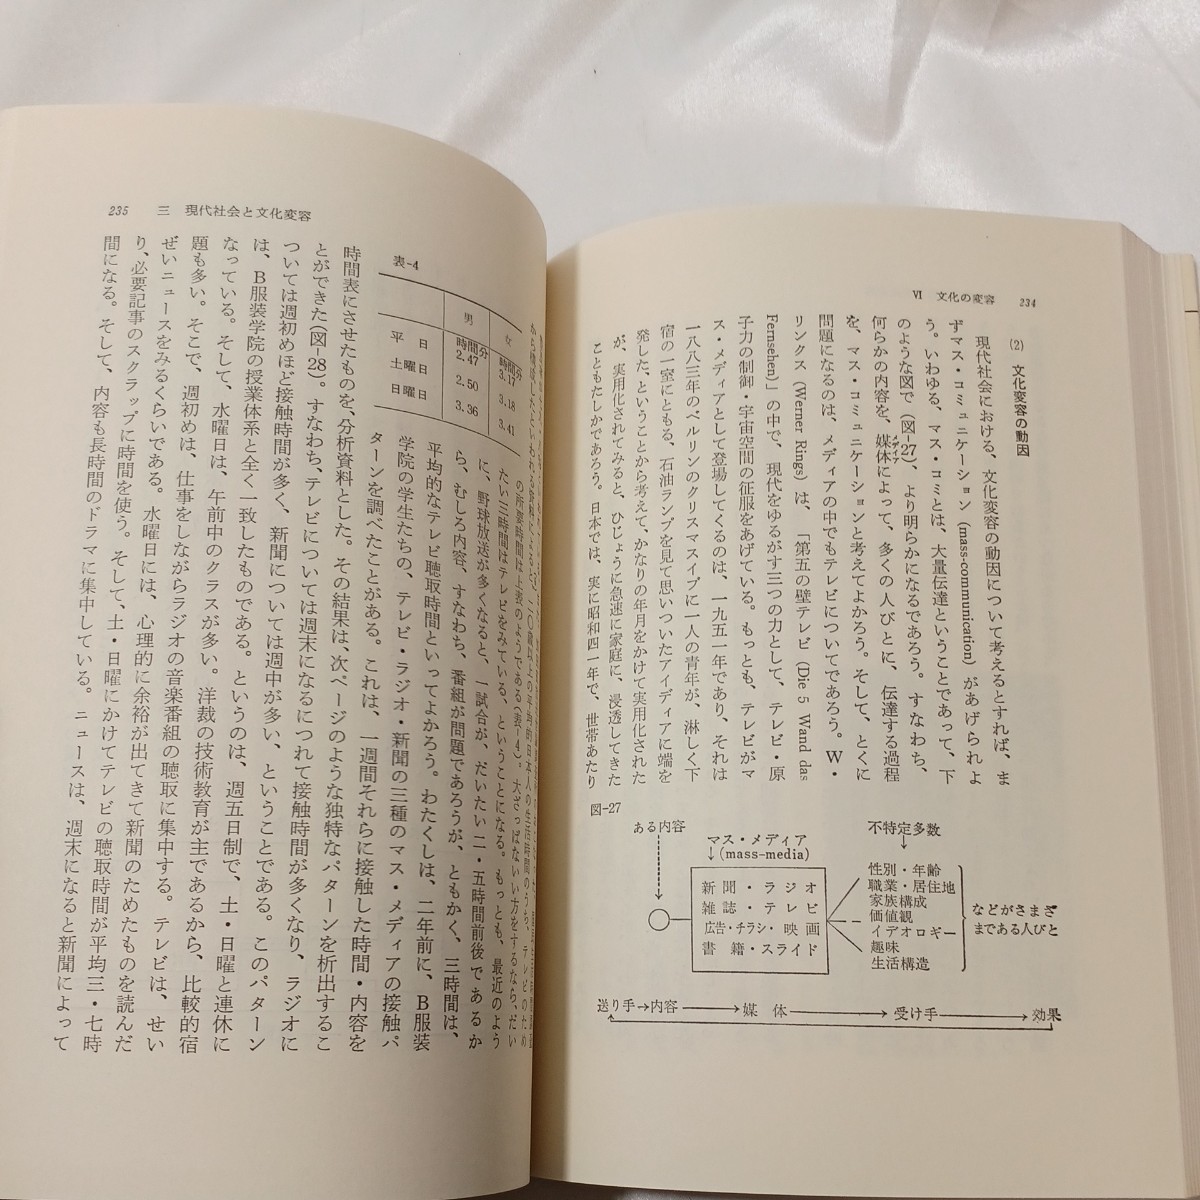 zaa-459♪女子学生のための社会学 (1980年) 　柳洋子 (著) 学陽書房